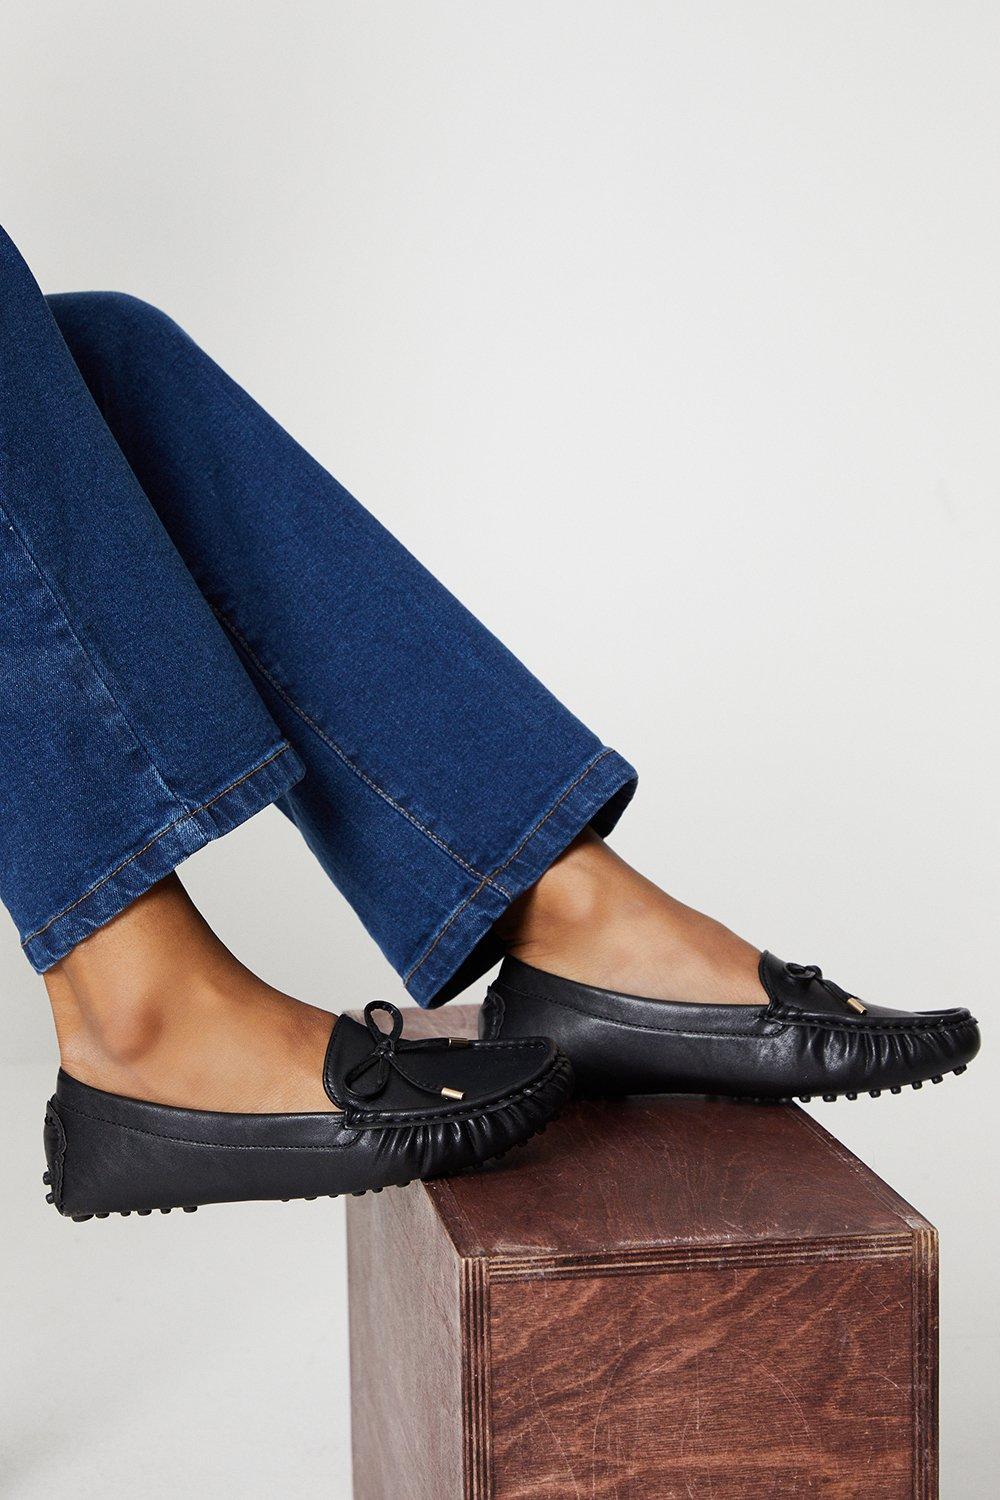 Women's Good For The Sole: Nilufa Comfort Moccasin Shoe - black - 8